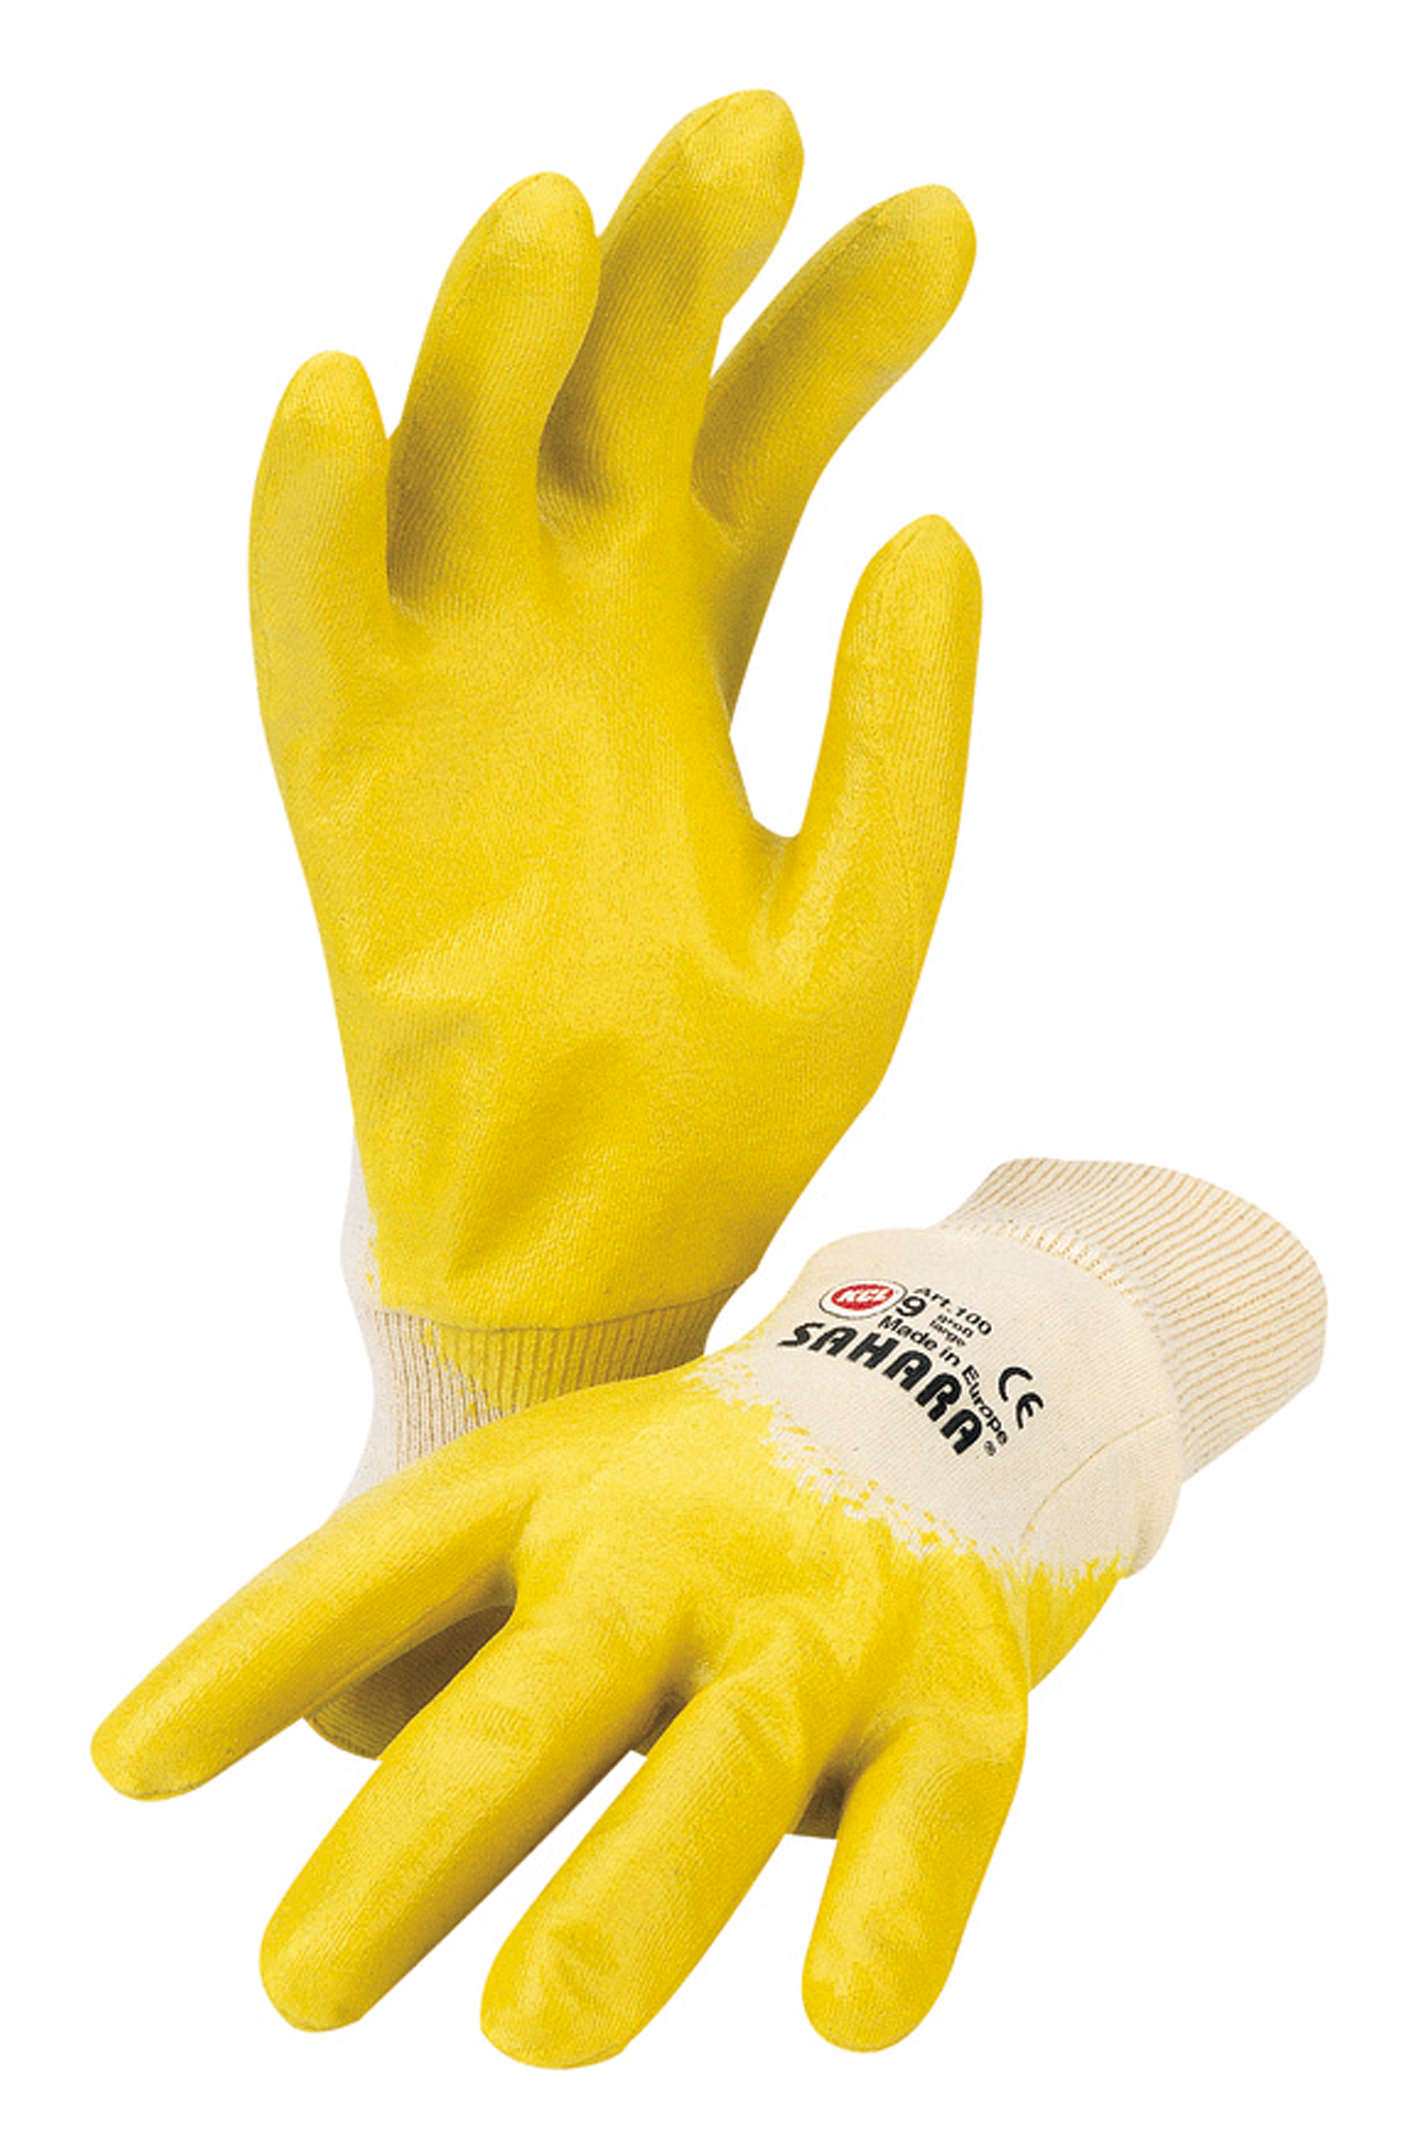 KCL Handschuhe Sahara 100 Gr 7-10 gelb Montagehandschuh 10 Paar 